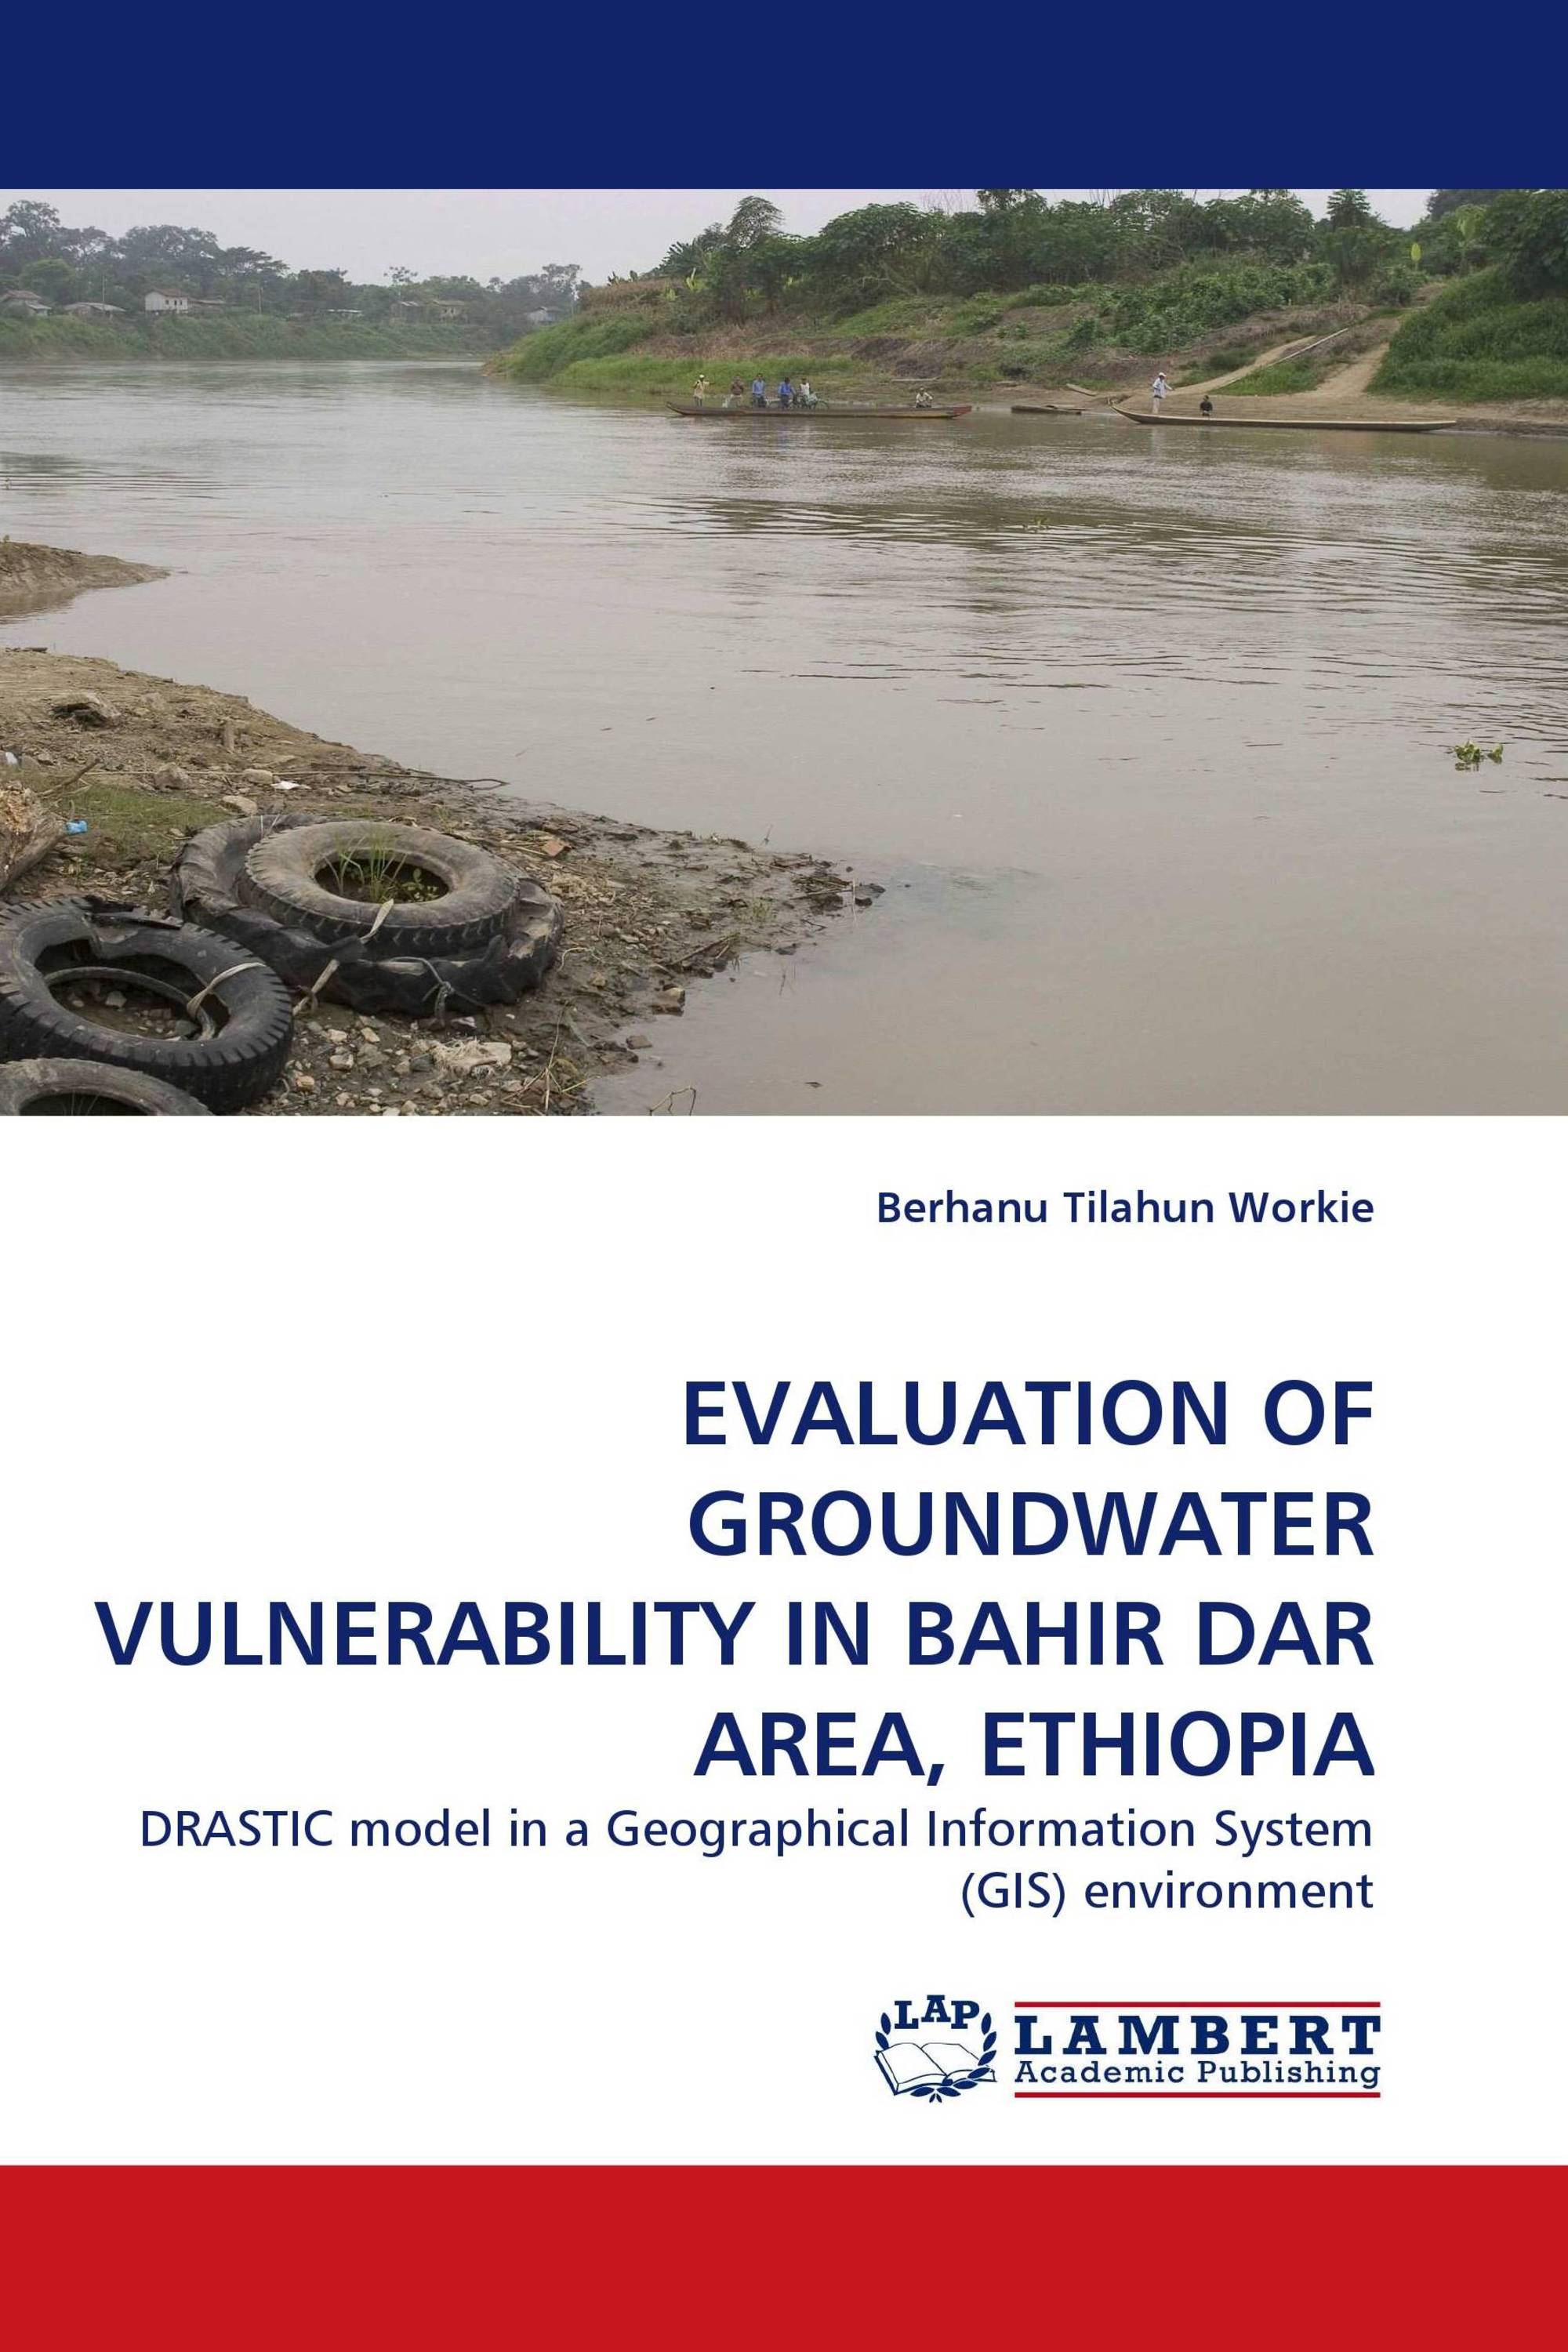 EVALUATION OF GROUNDWATER VULNERABILITY IN BAHIR DAR AREA, ETHIOPIA